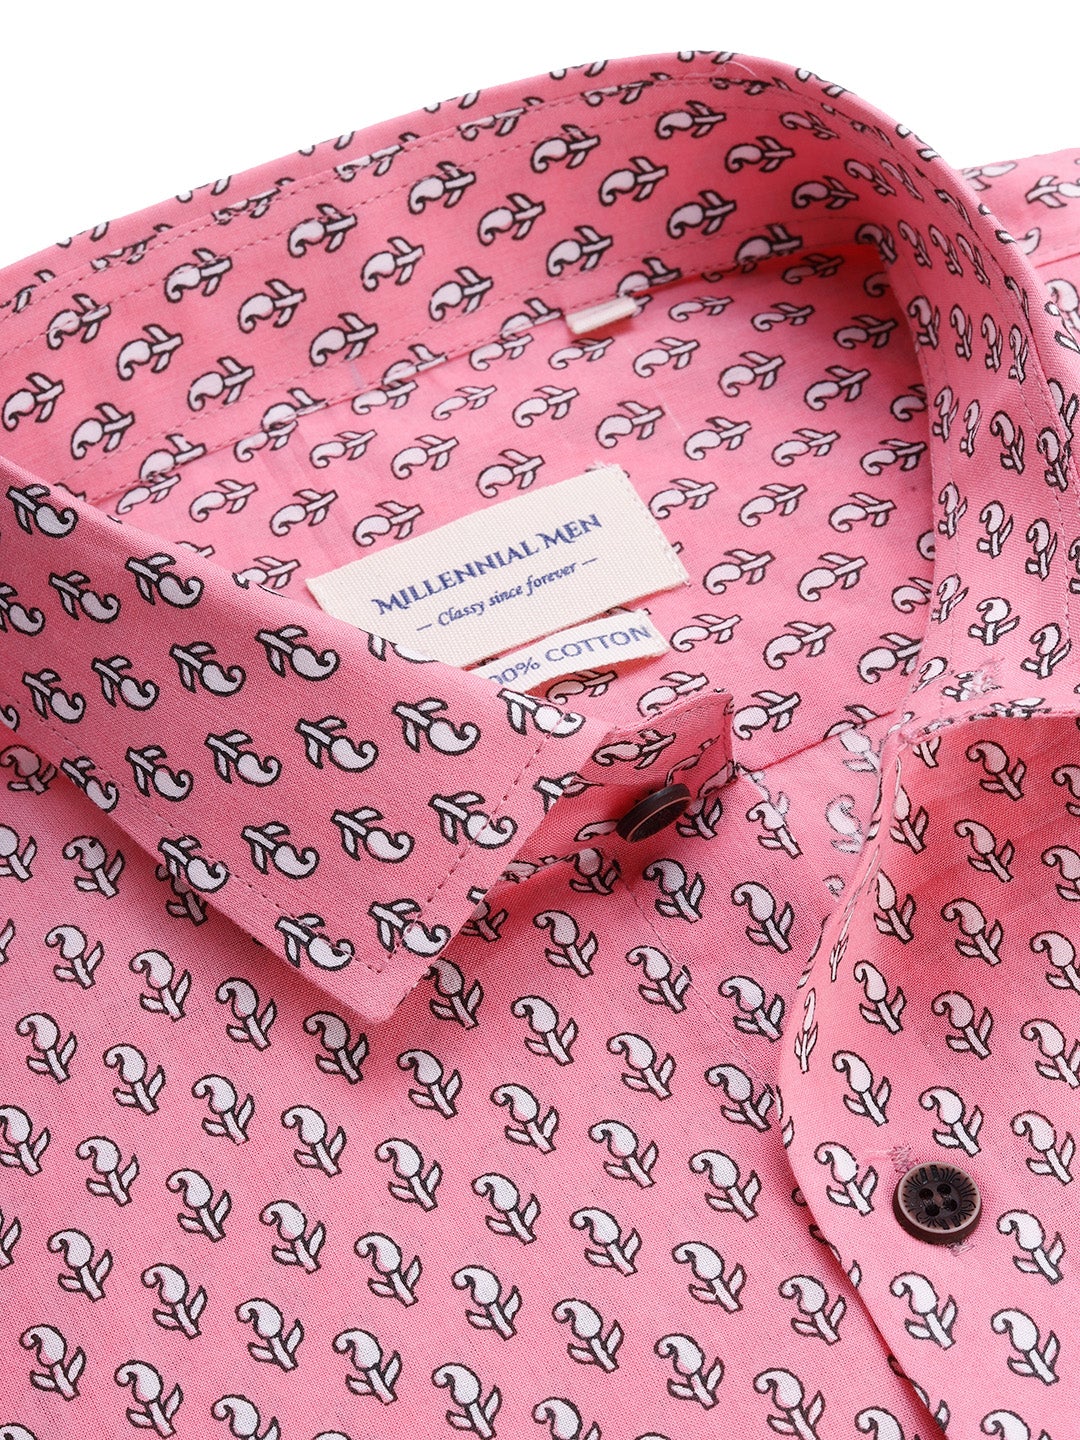 Pink Cotton Short Sleeves Shirts For Men-MMH025 - NOZ2TOZ